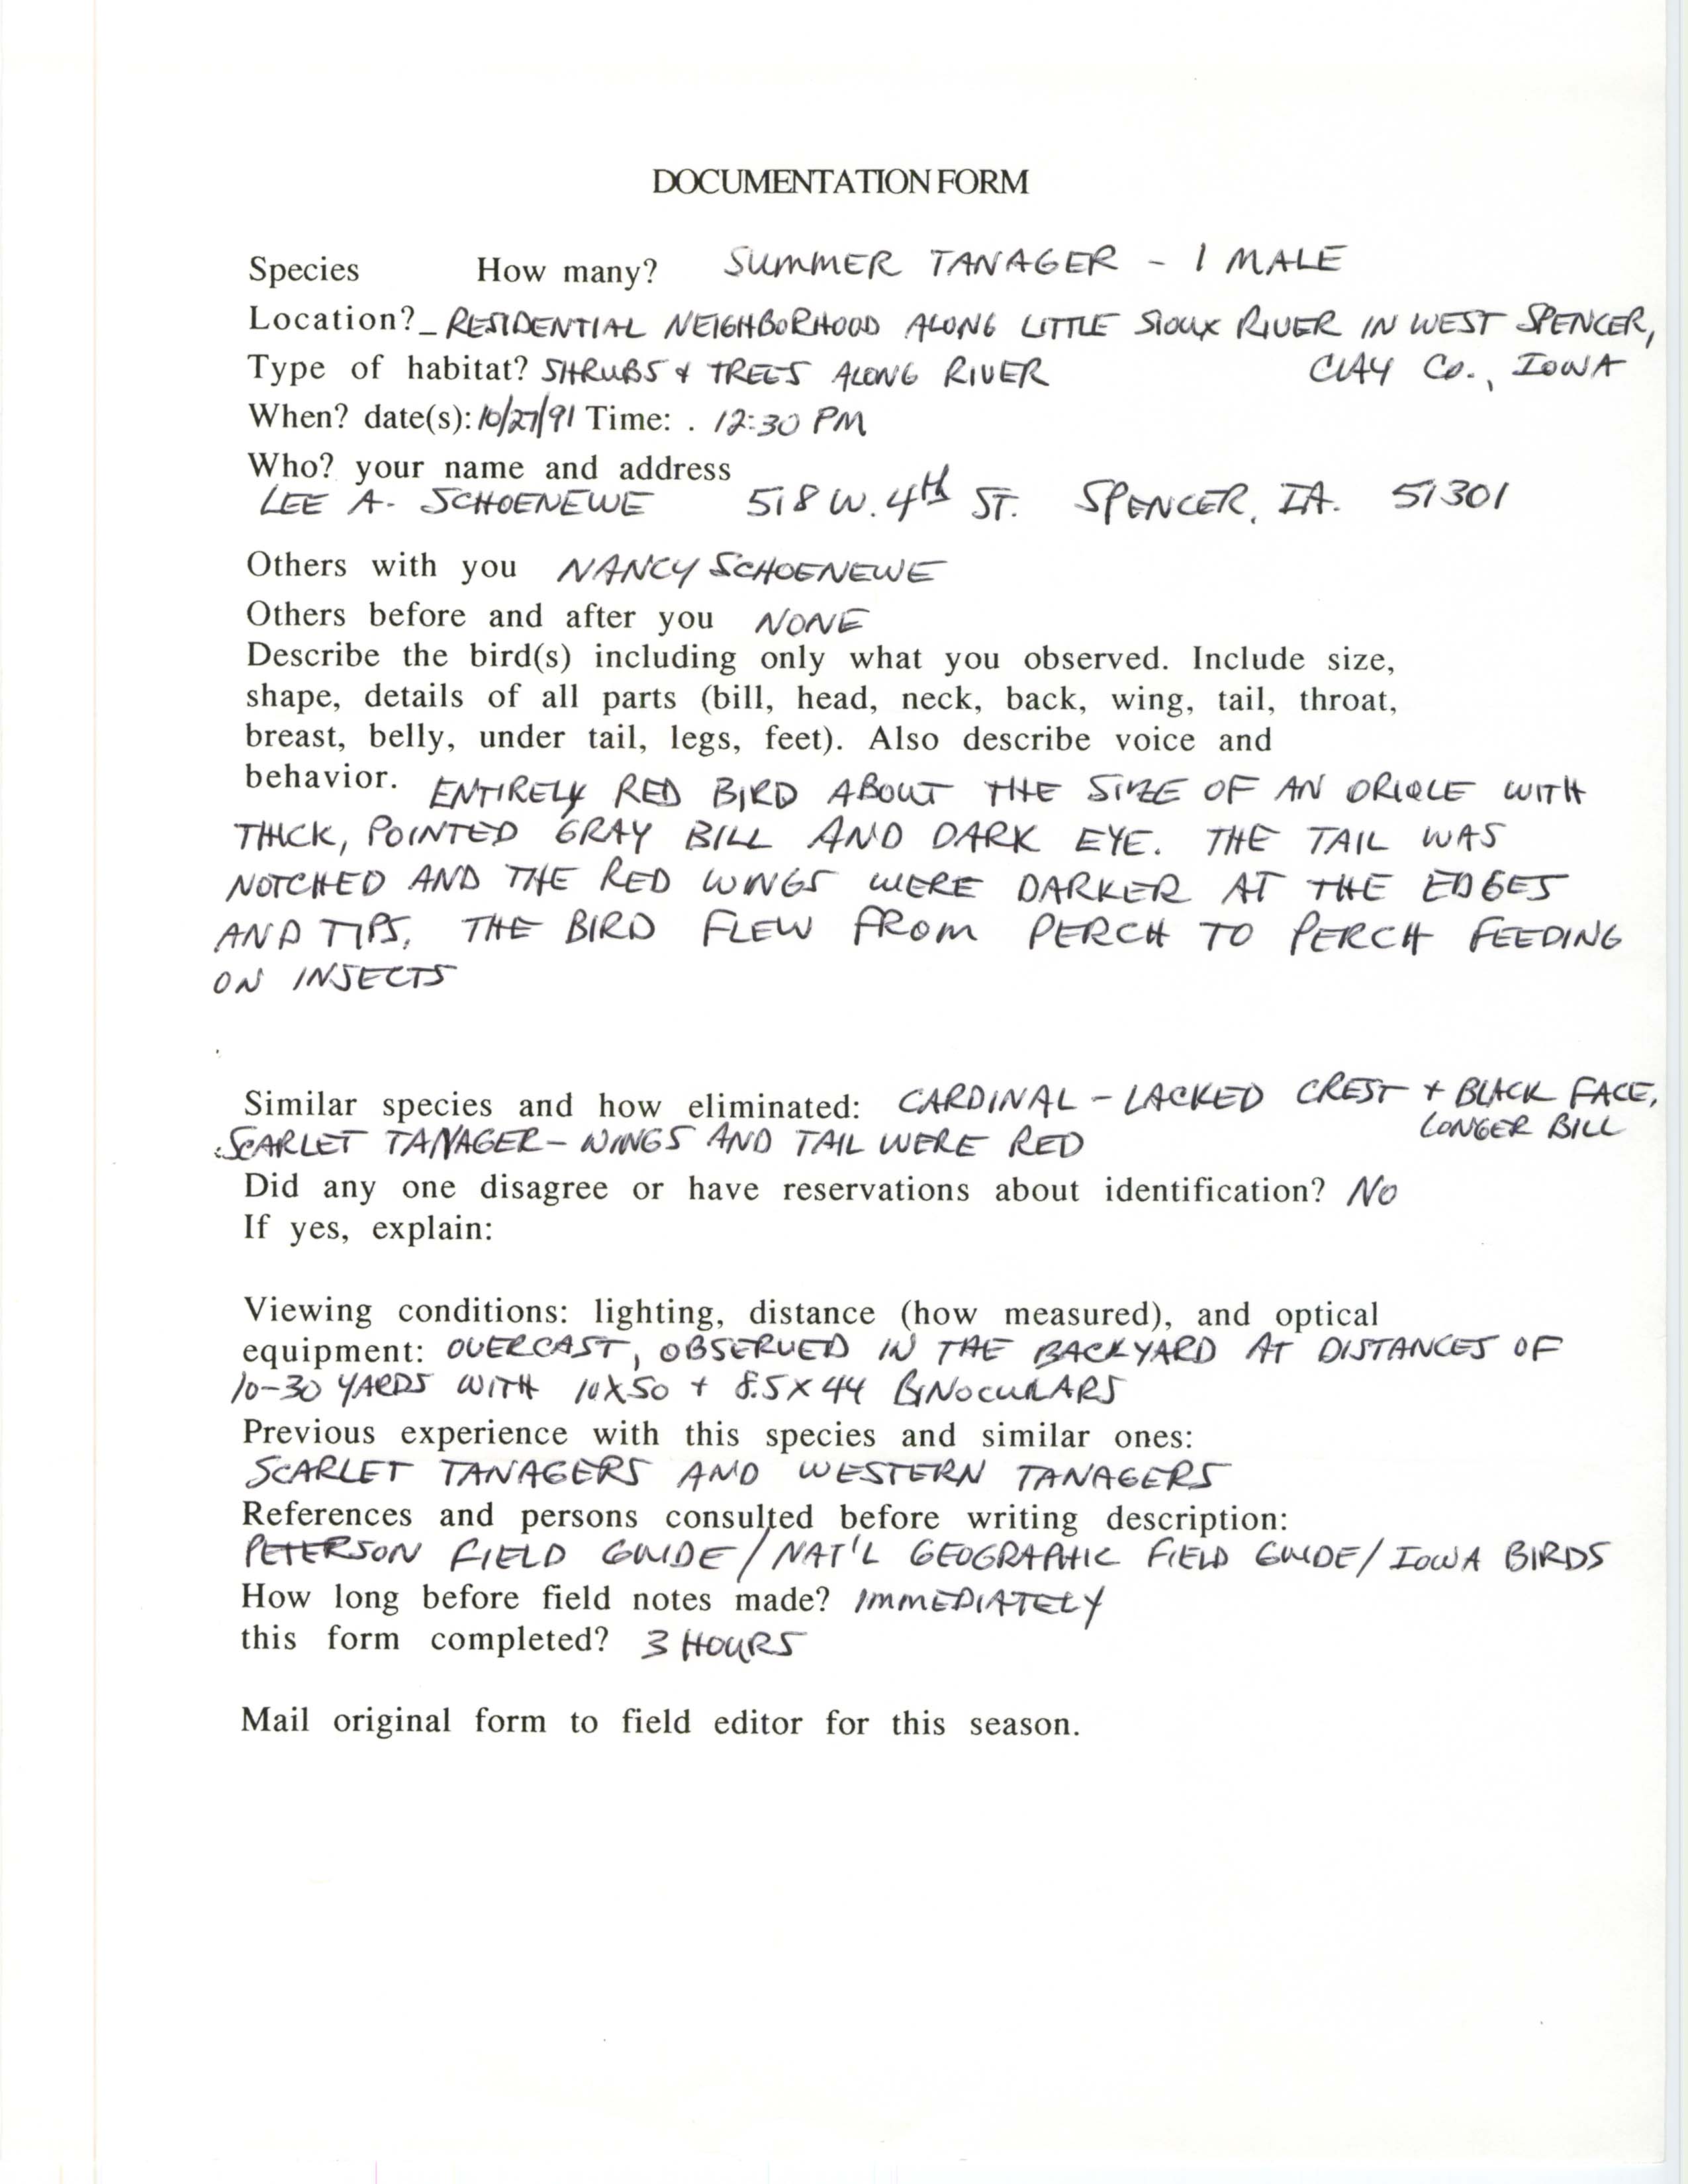 Rare bird documentation form for Summer Tanager at West Spencer, 1991